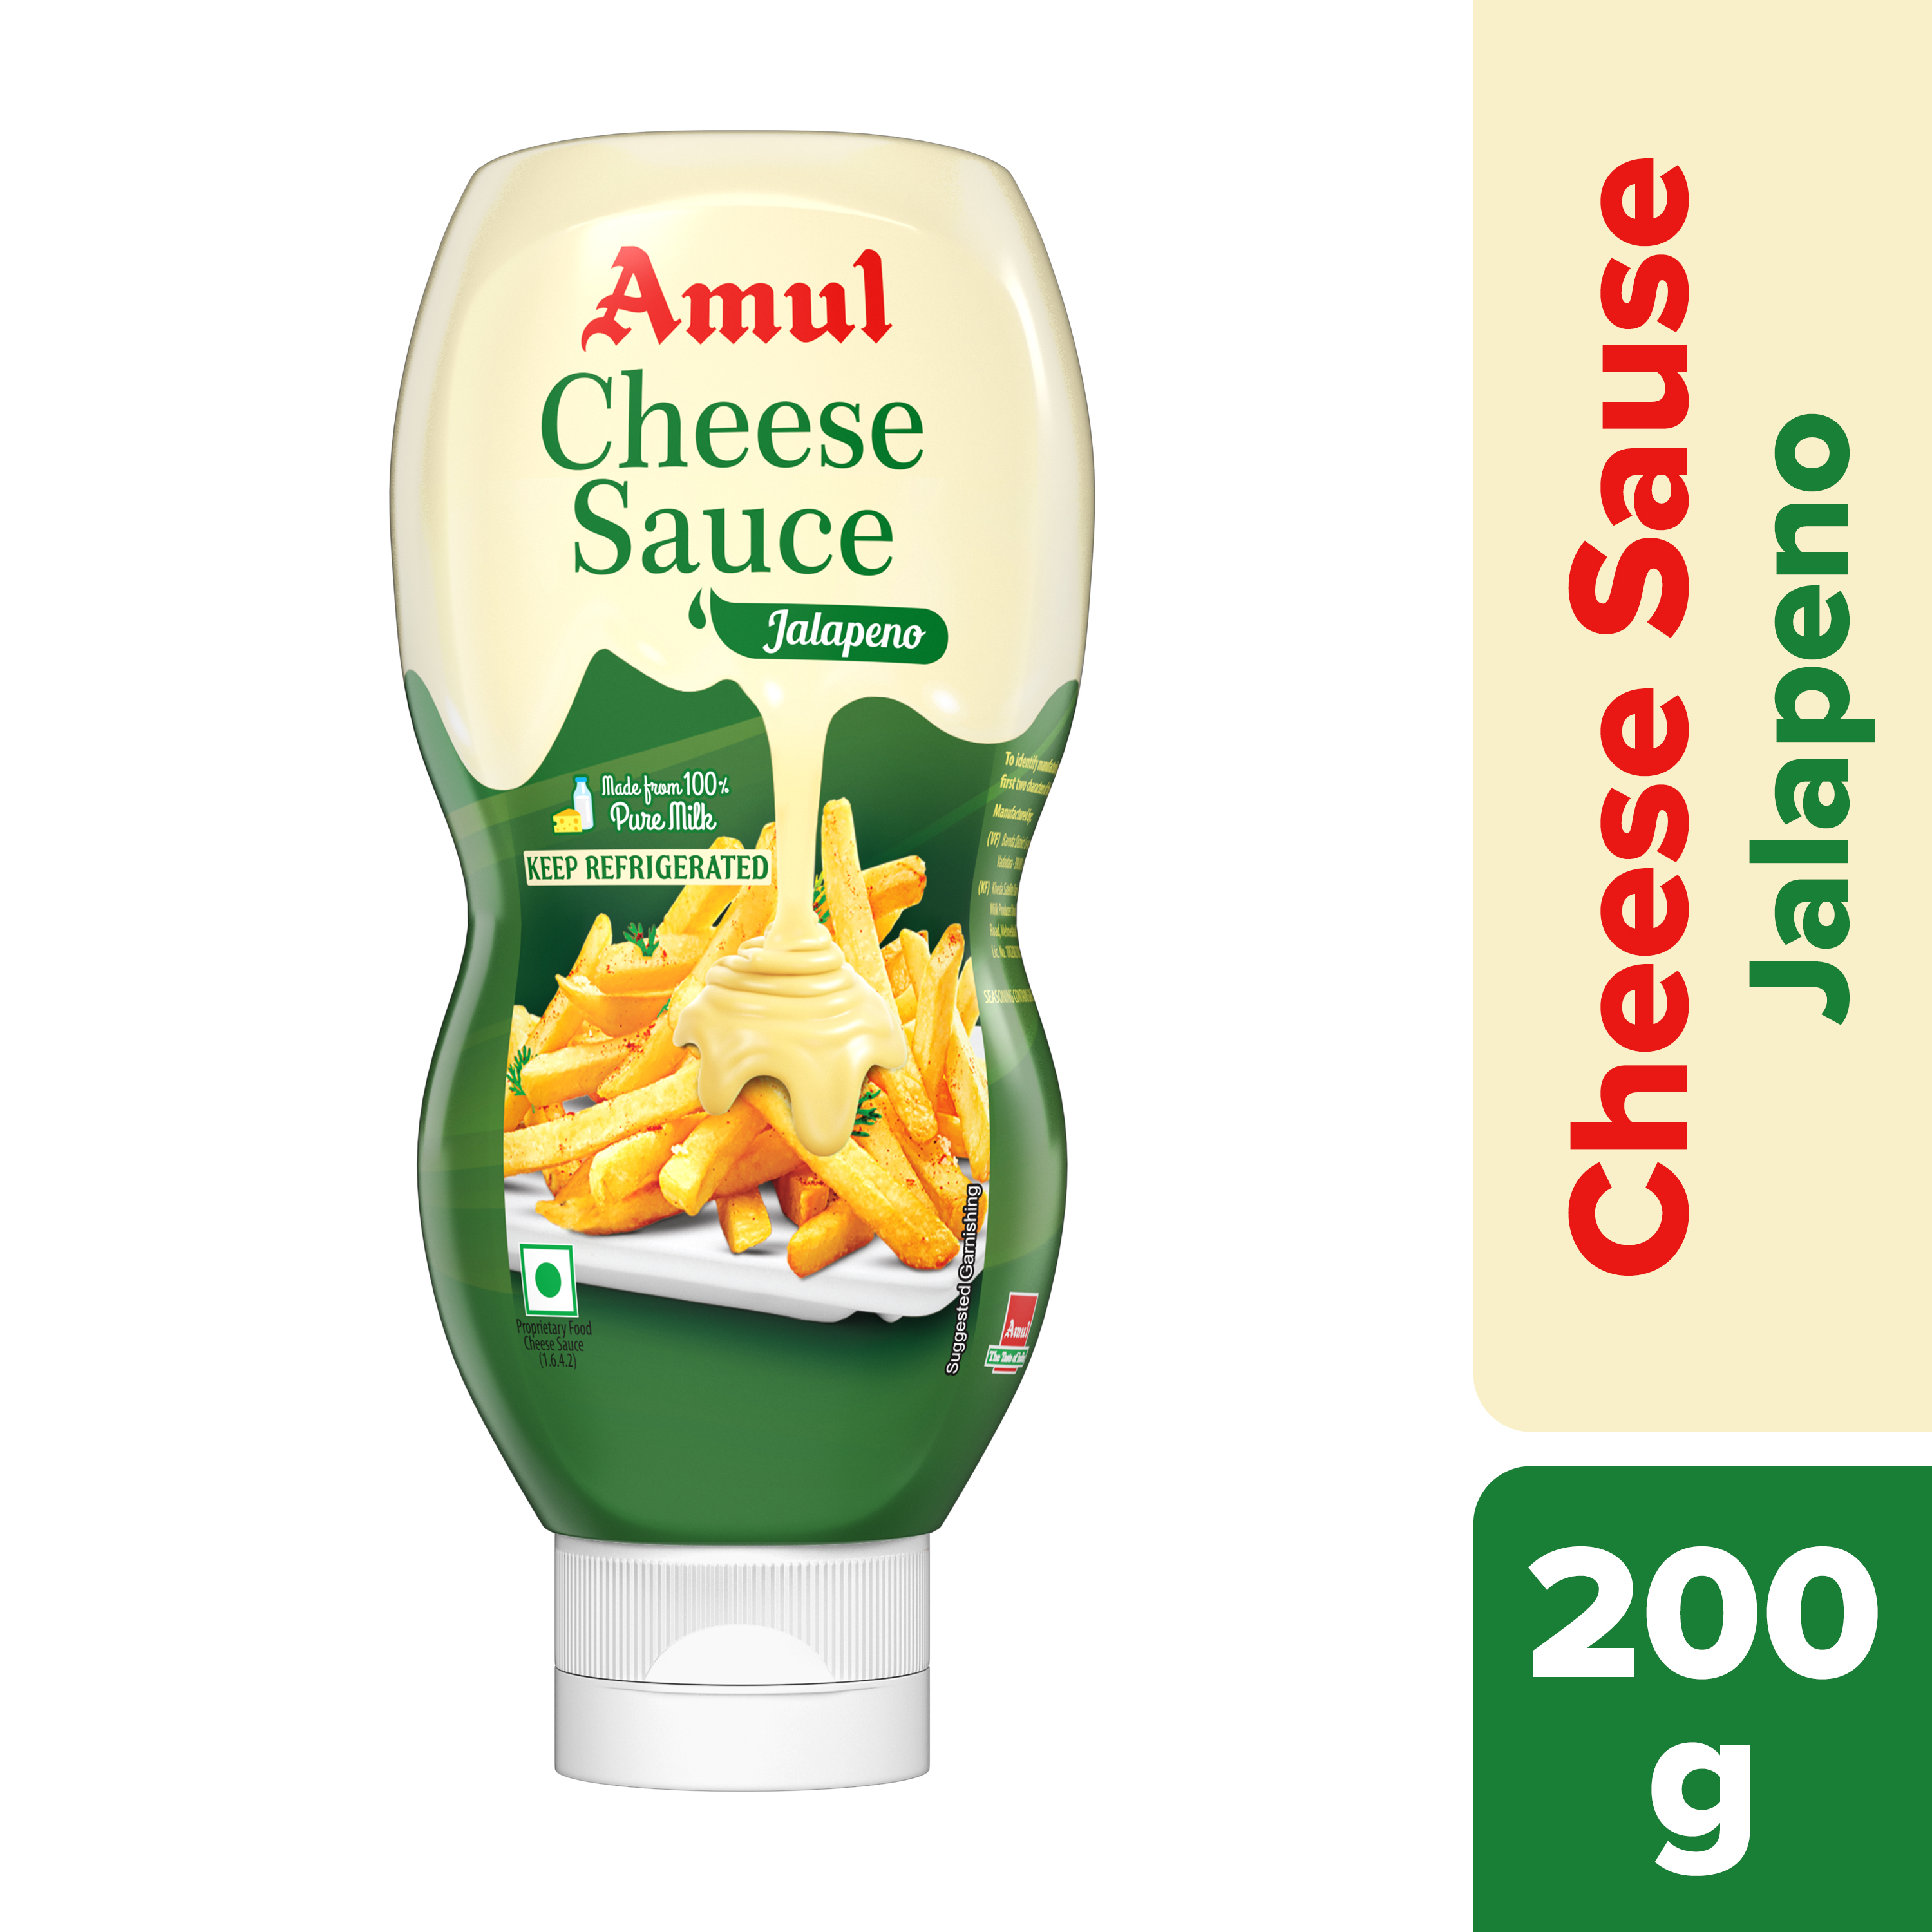 Amul Cheese Sauce - Jalapeno